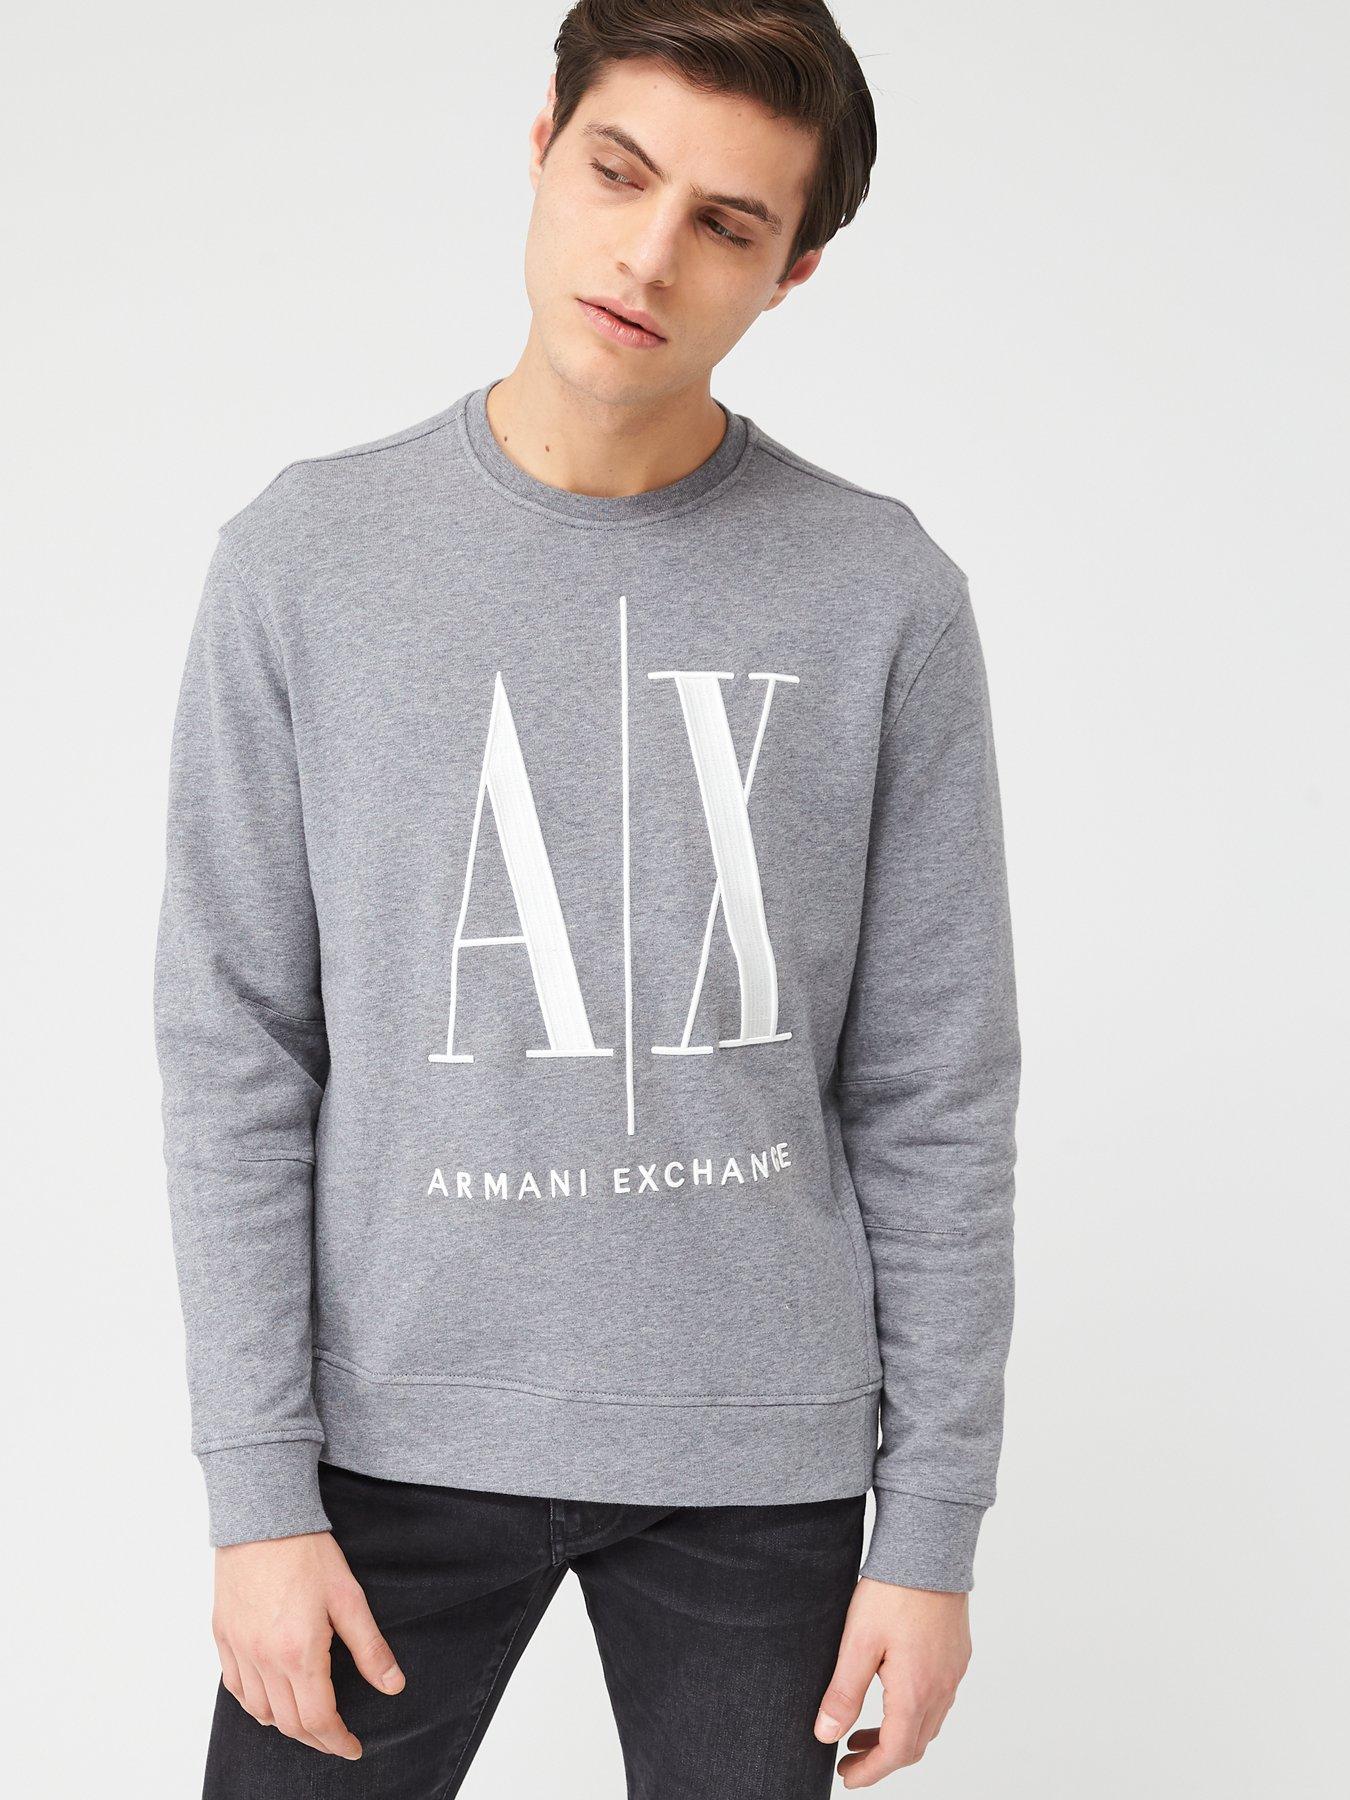 L | Armani exchange | Hoodies & sweatshirts | Men 